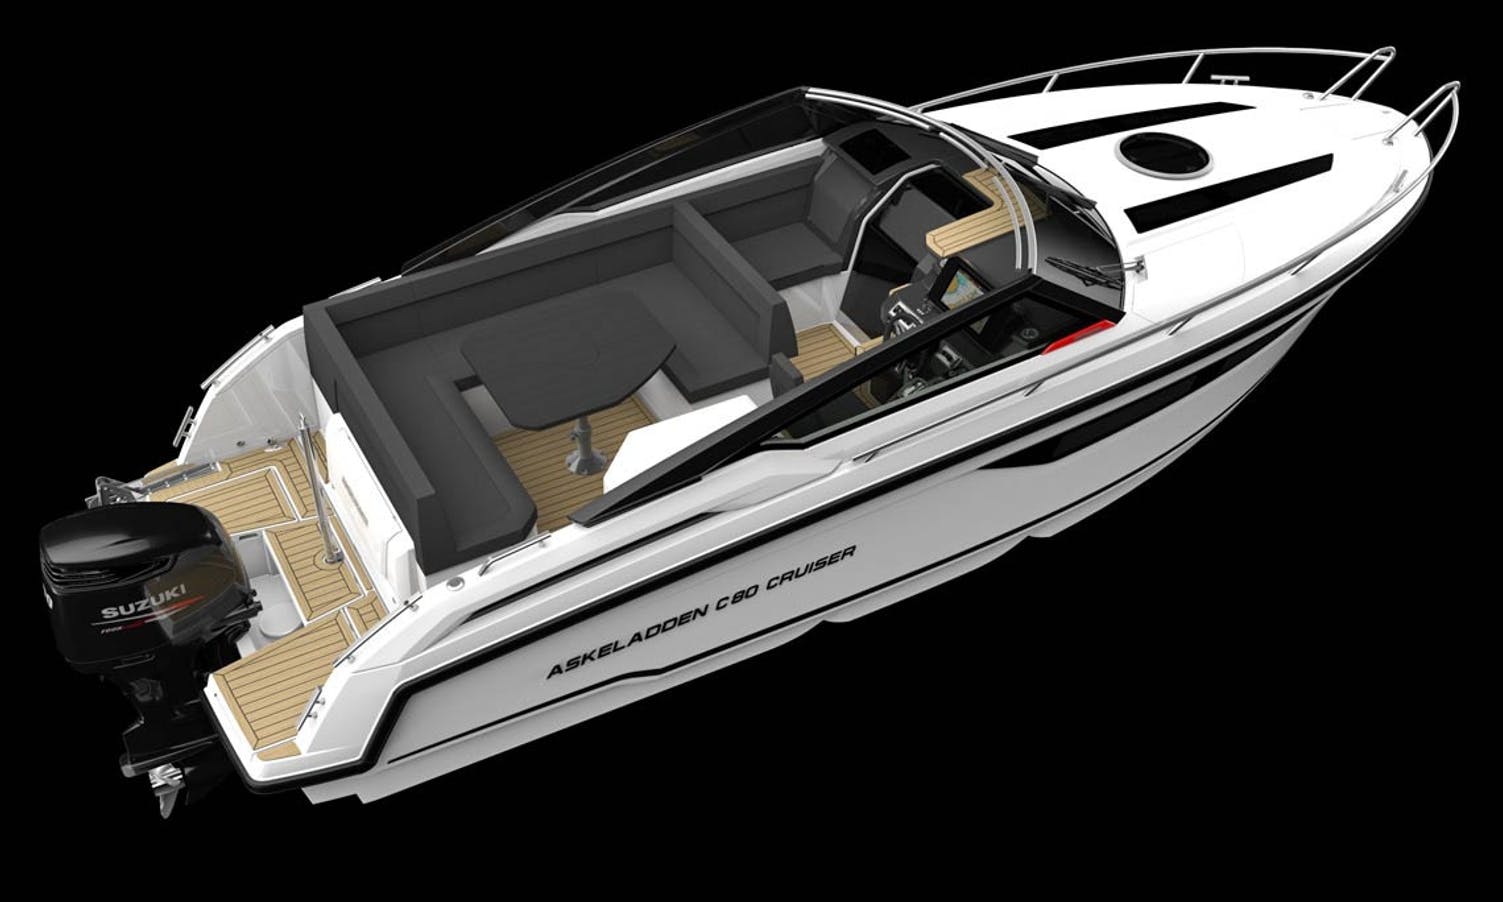 Lanserer stor daycruiser: Første båt i ny design